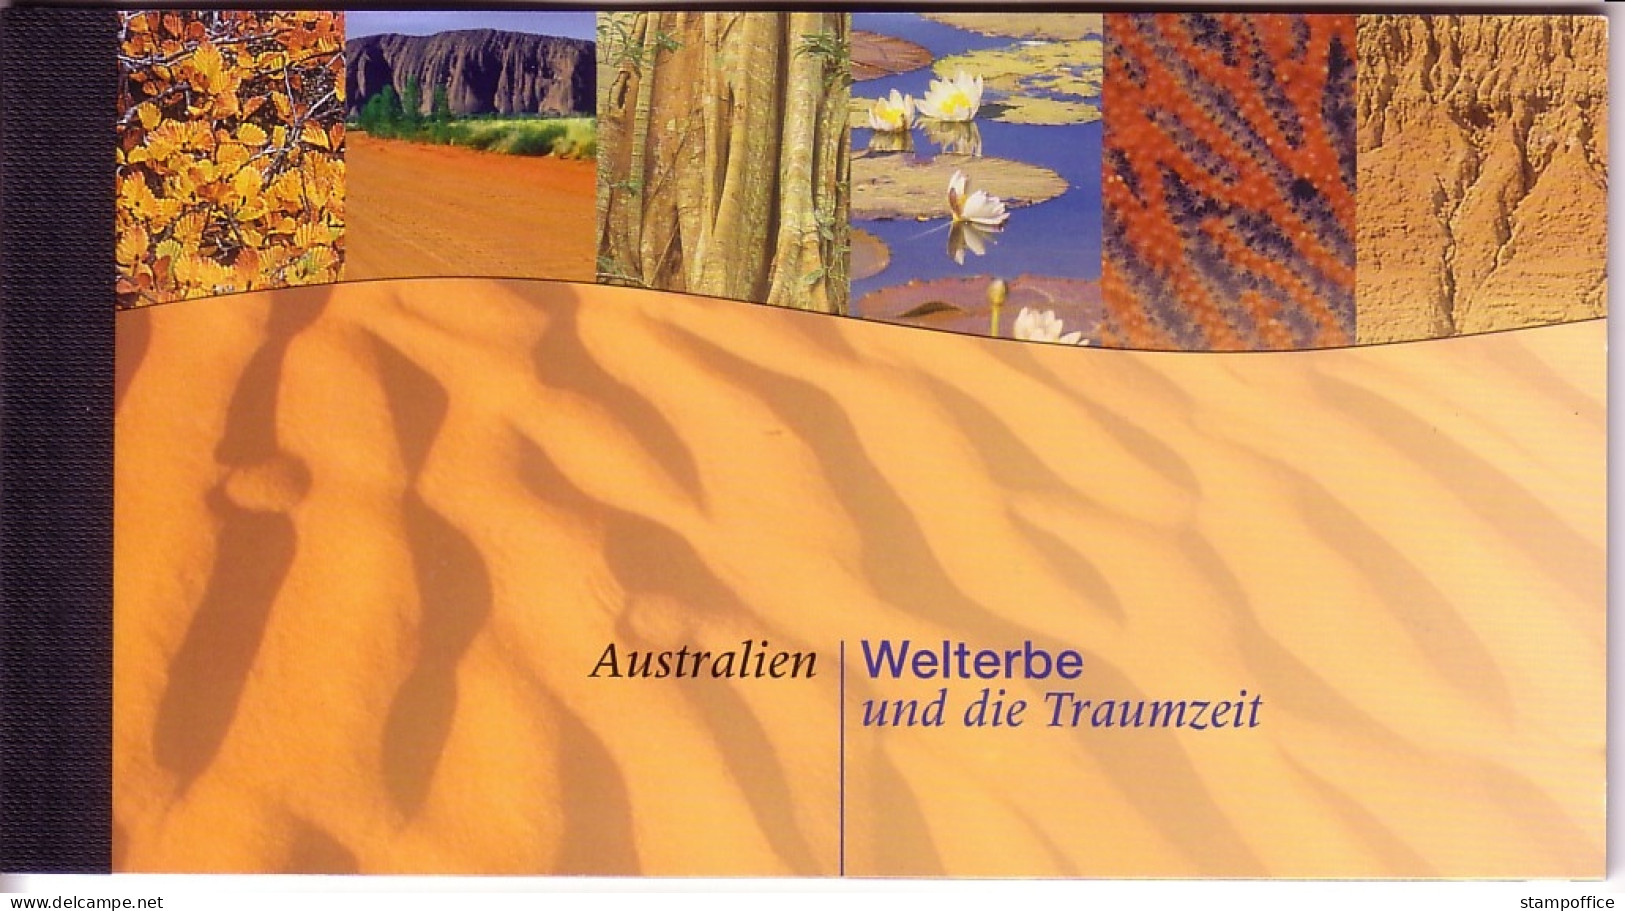 UNO WIEN MH 0-4 POSTFRISCH(MINT) UNESCO-WELTERBE AUSTRALIEN - Carnets